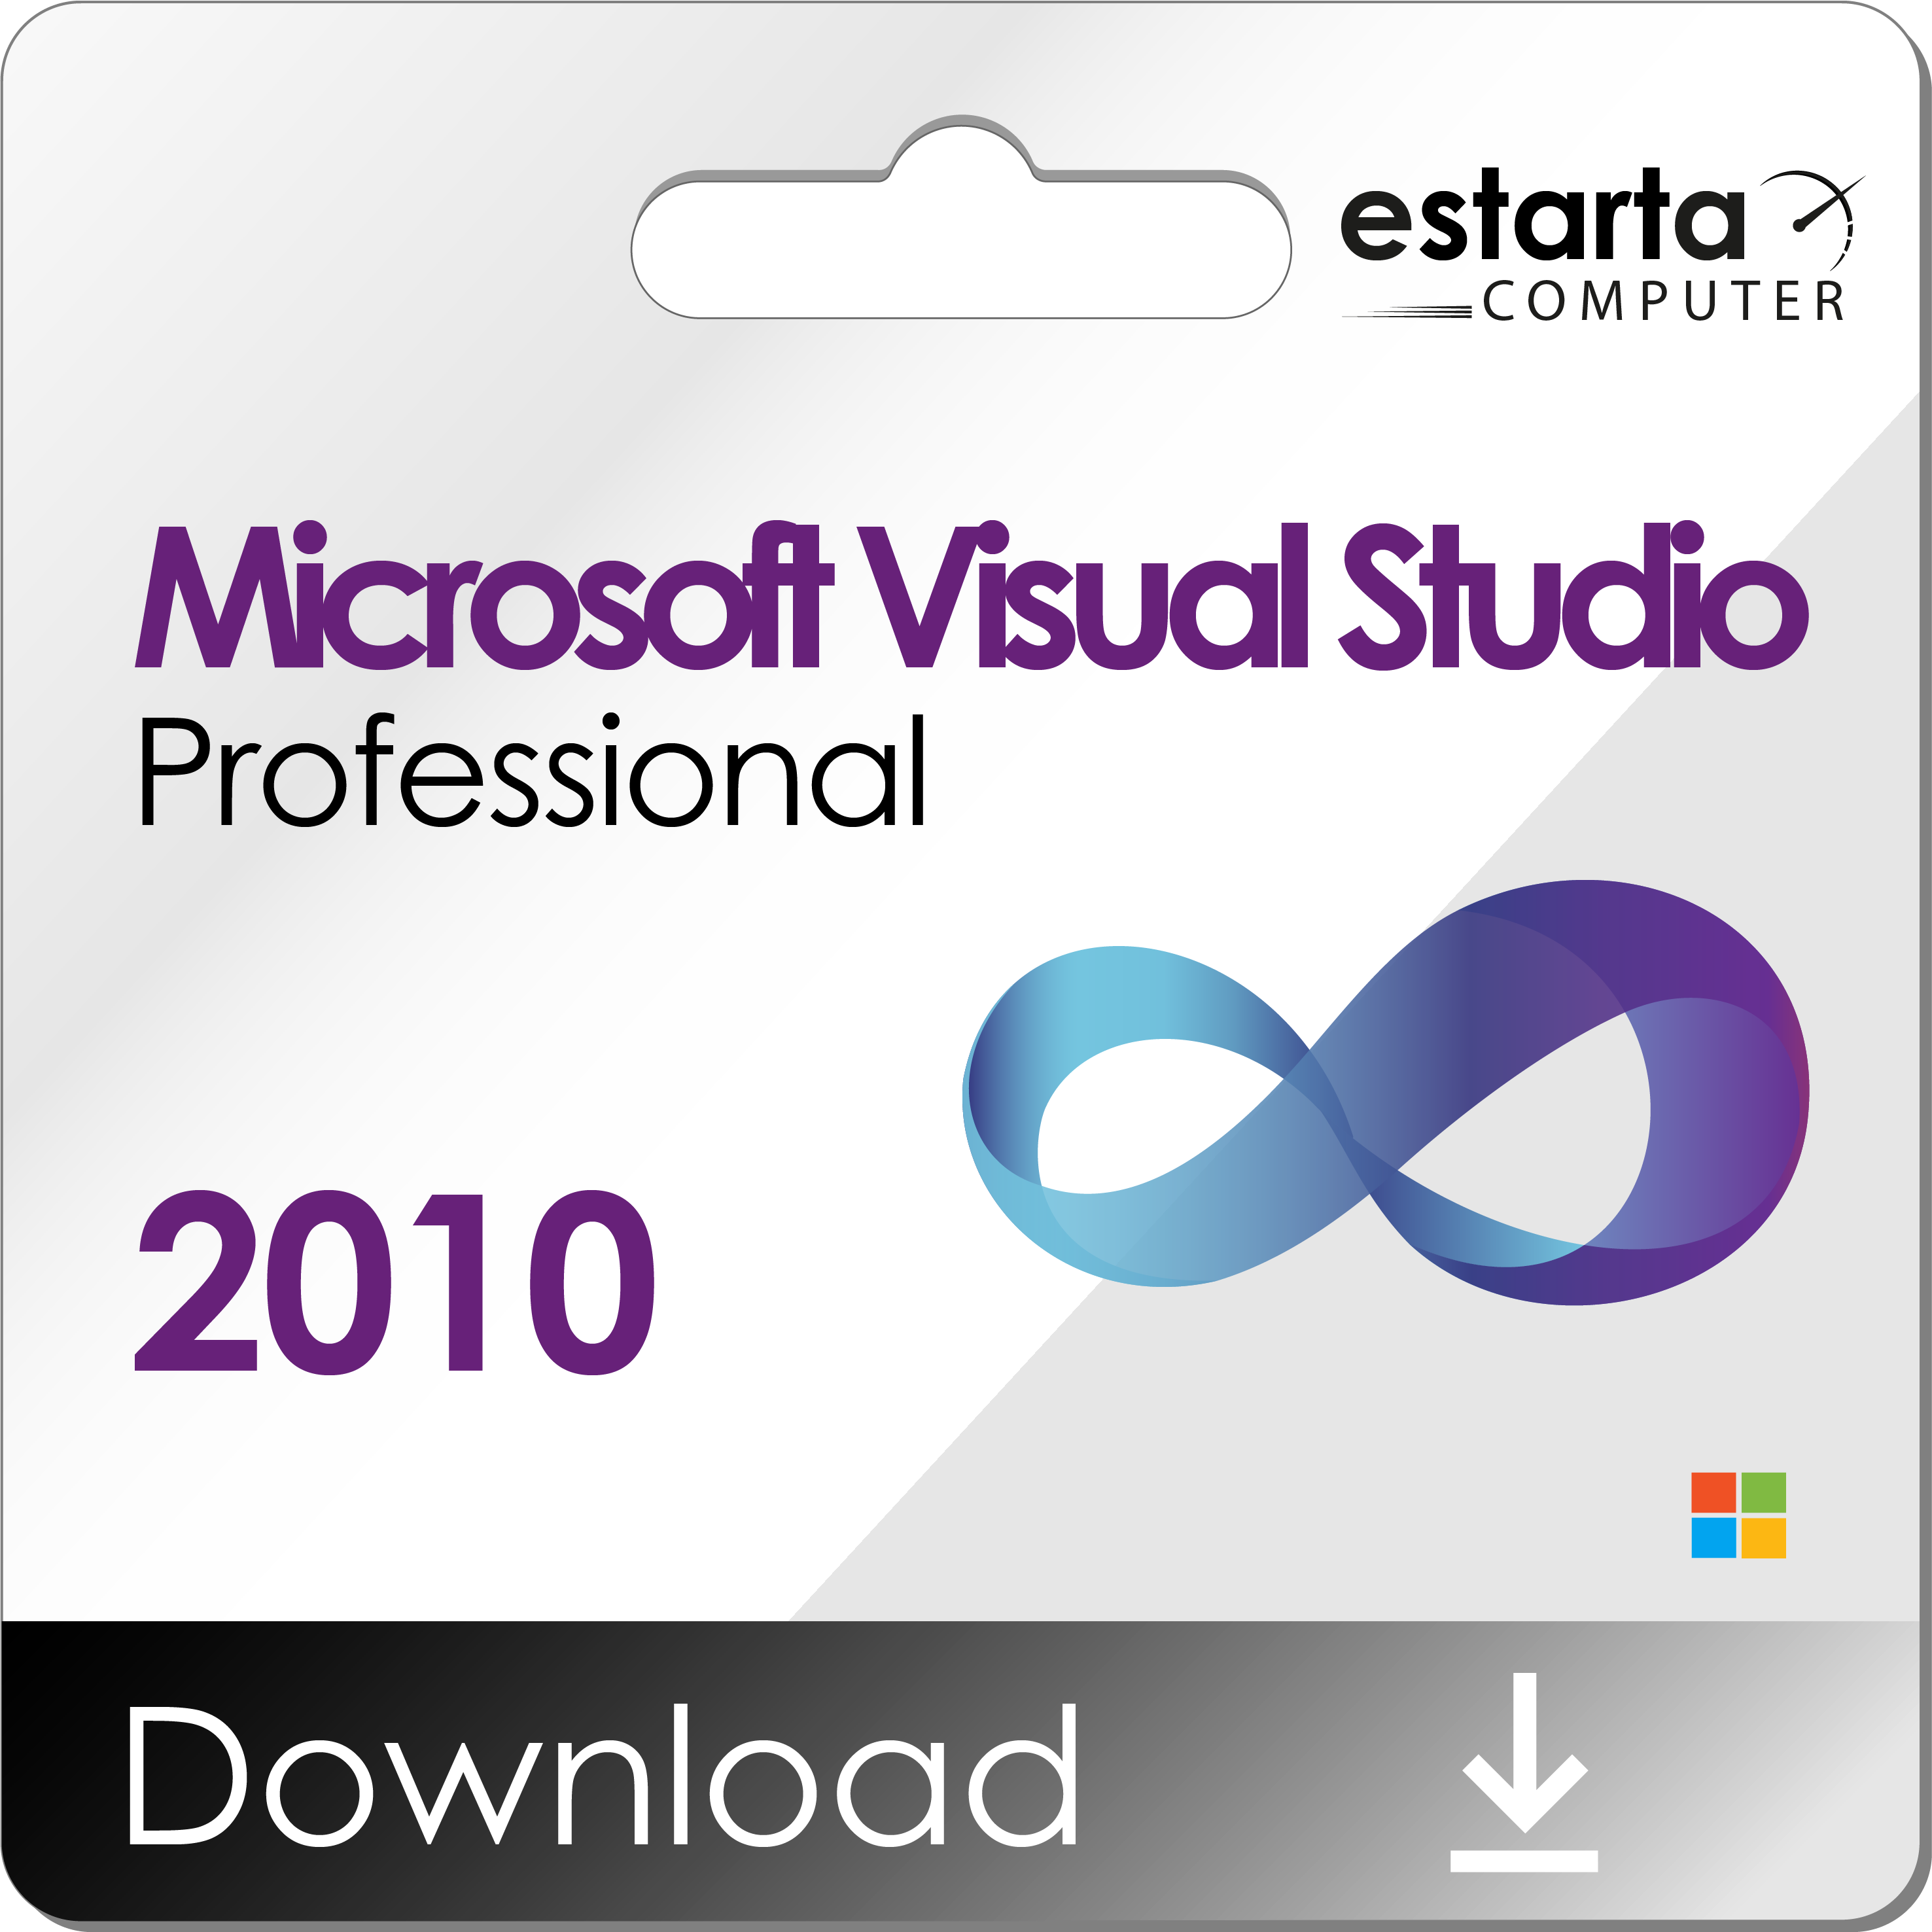 Microsoft Visual Studio 2010 Professional